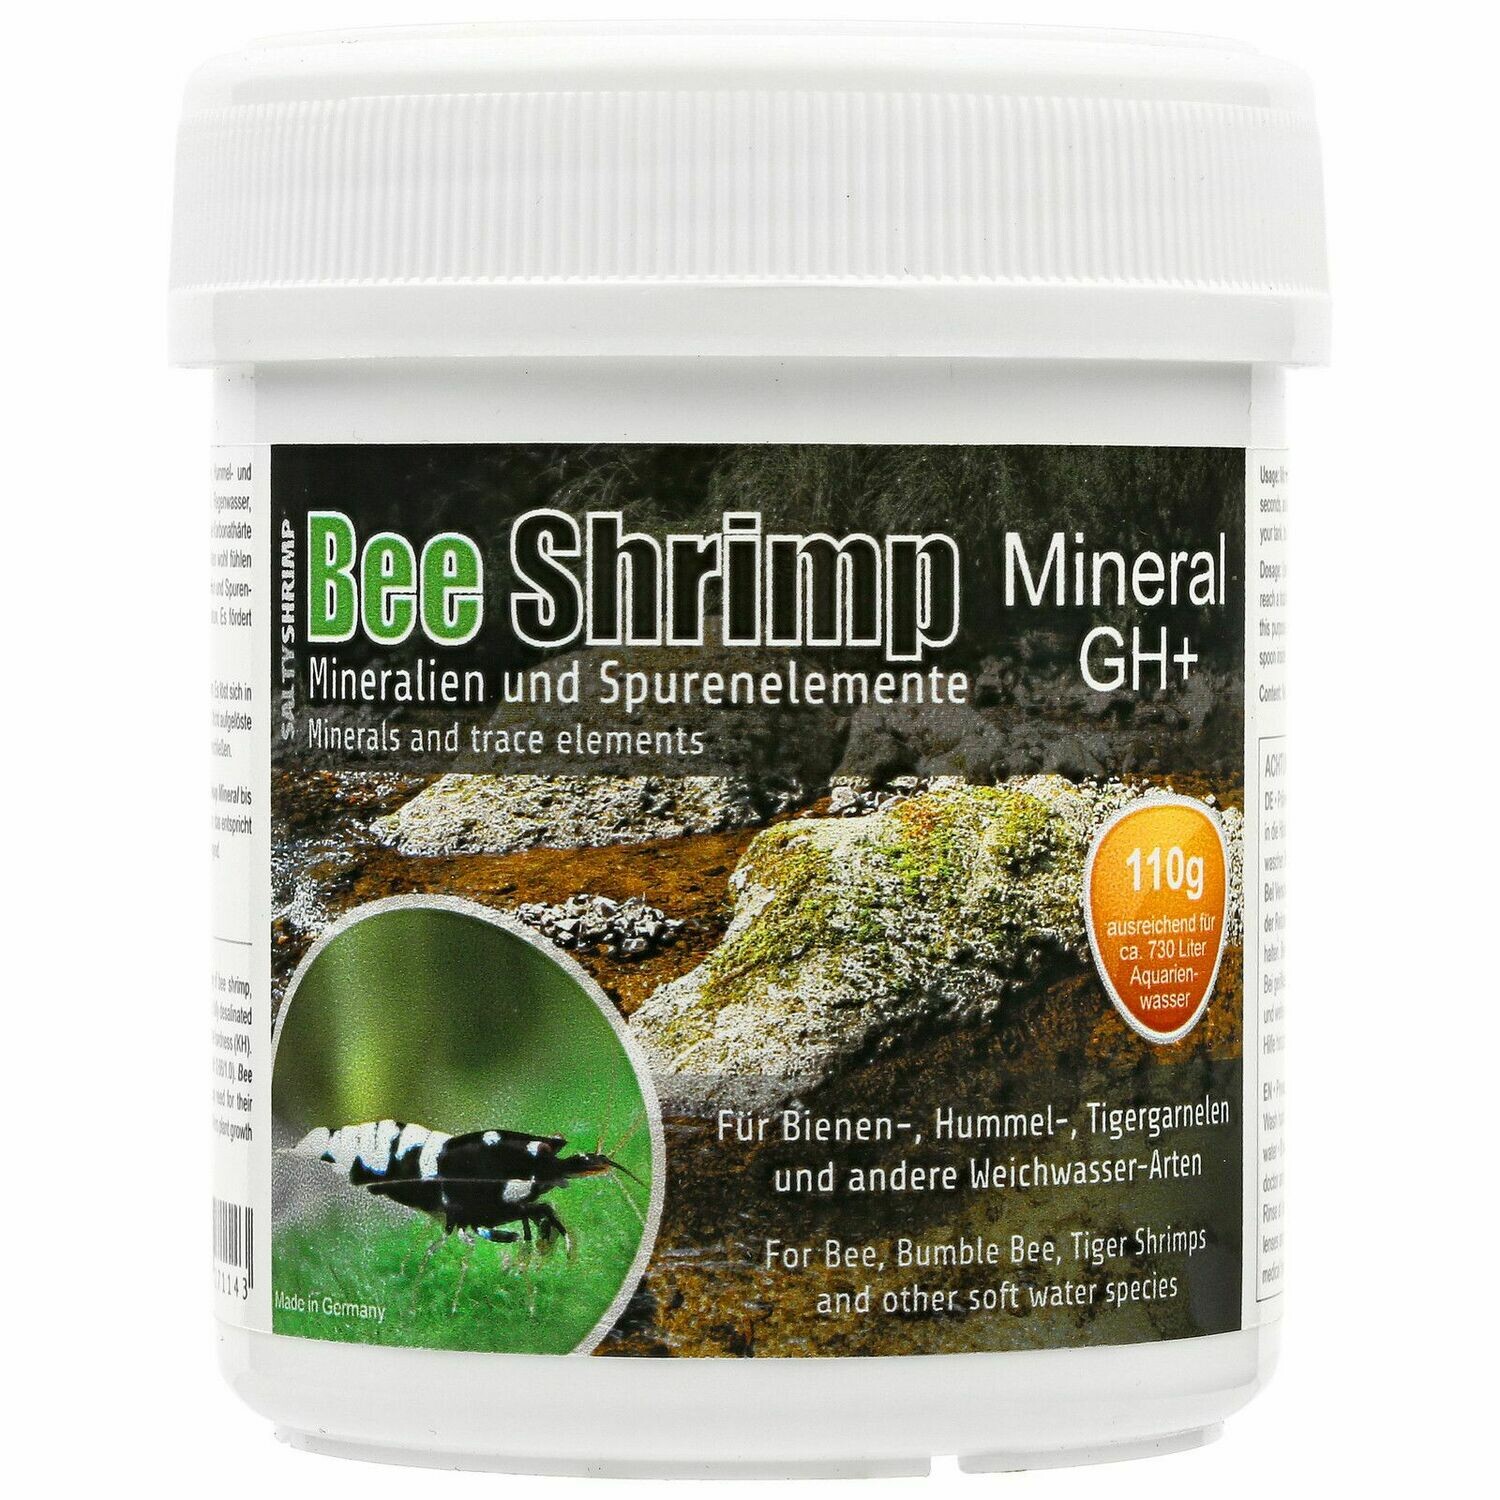 Salty Shrimp Bee Shrimp Mineral GH+ - 110g / 230g